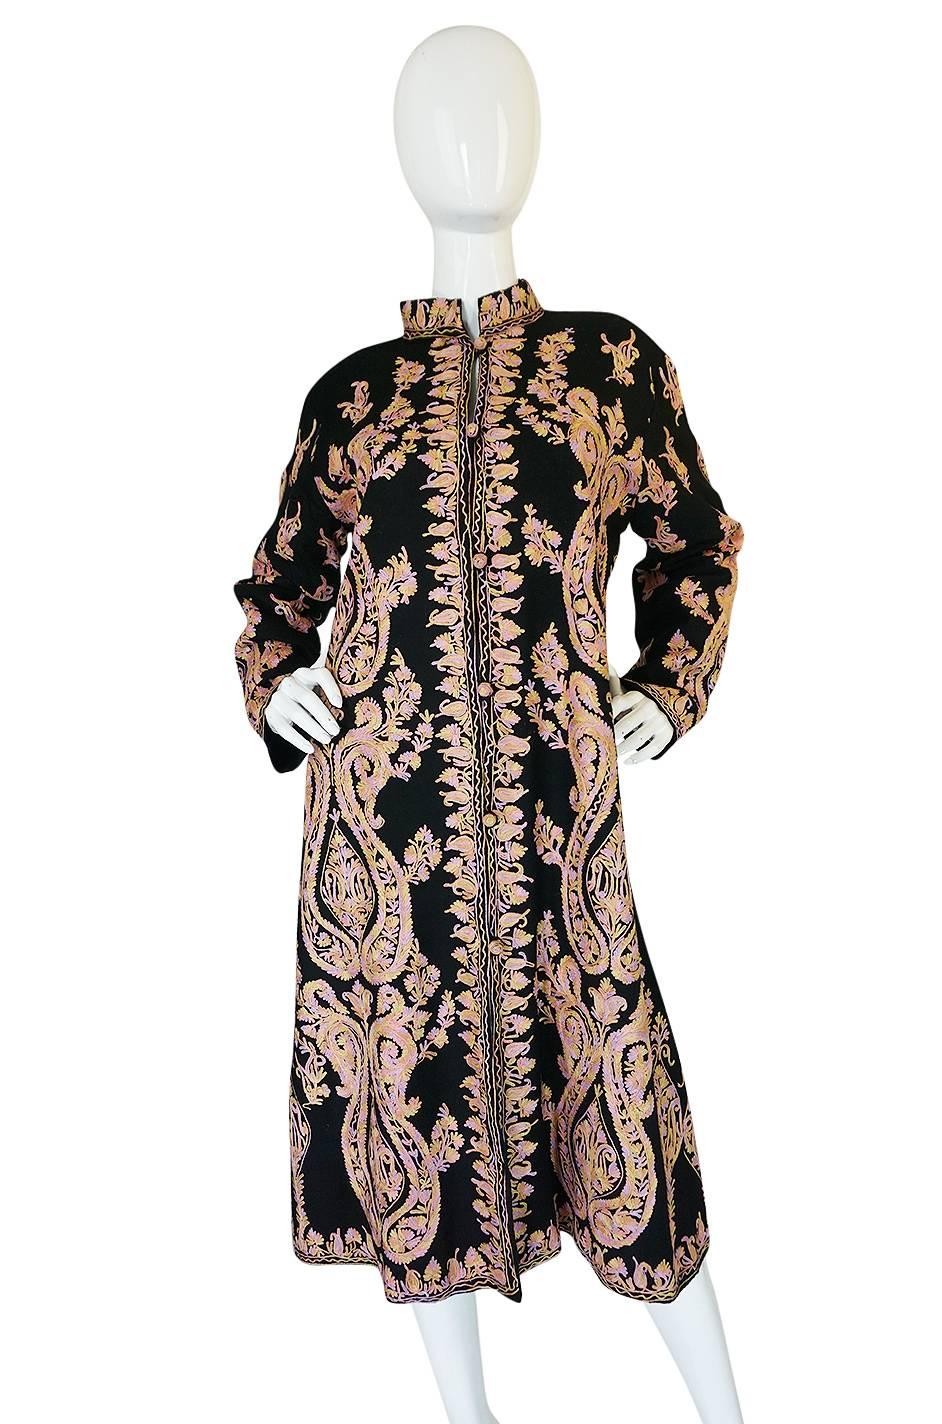 Women's 1960s Pastel Crewel Embroidered Detailing Black Jacket